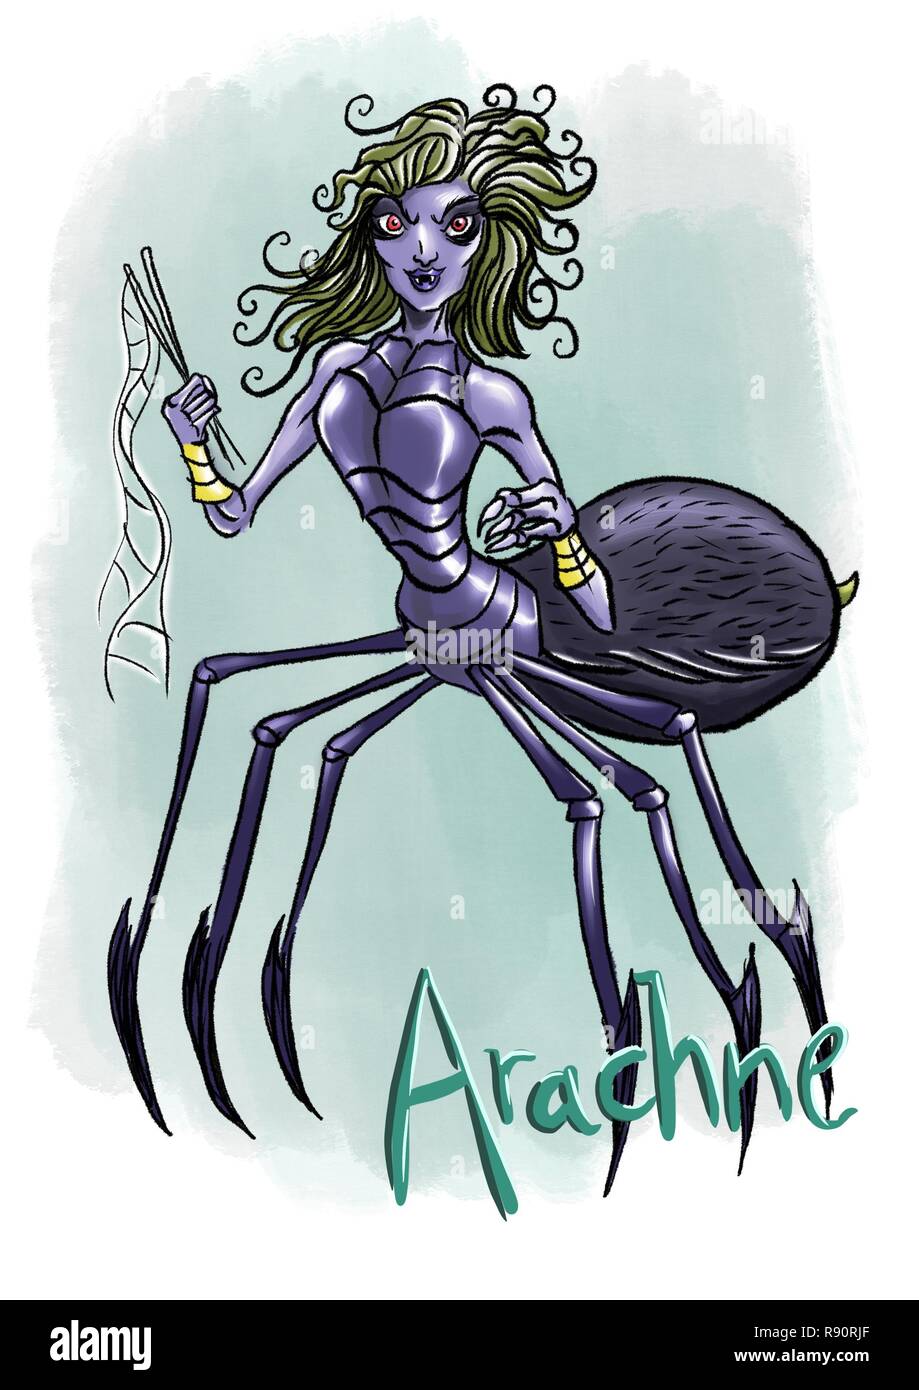 Arachne the spider illustration Stock Photo